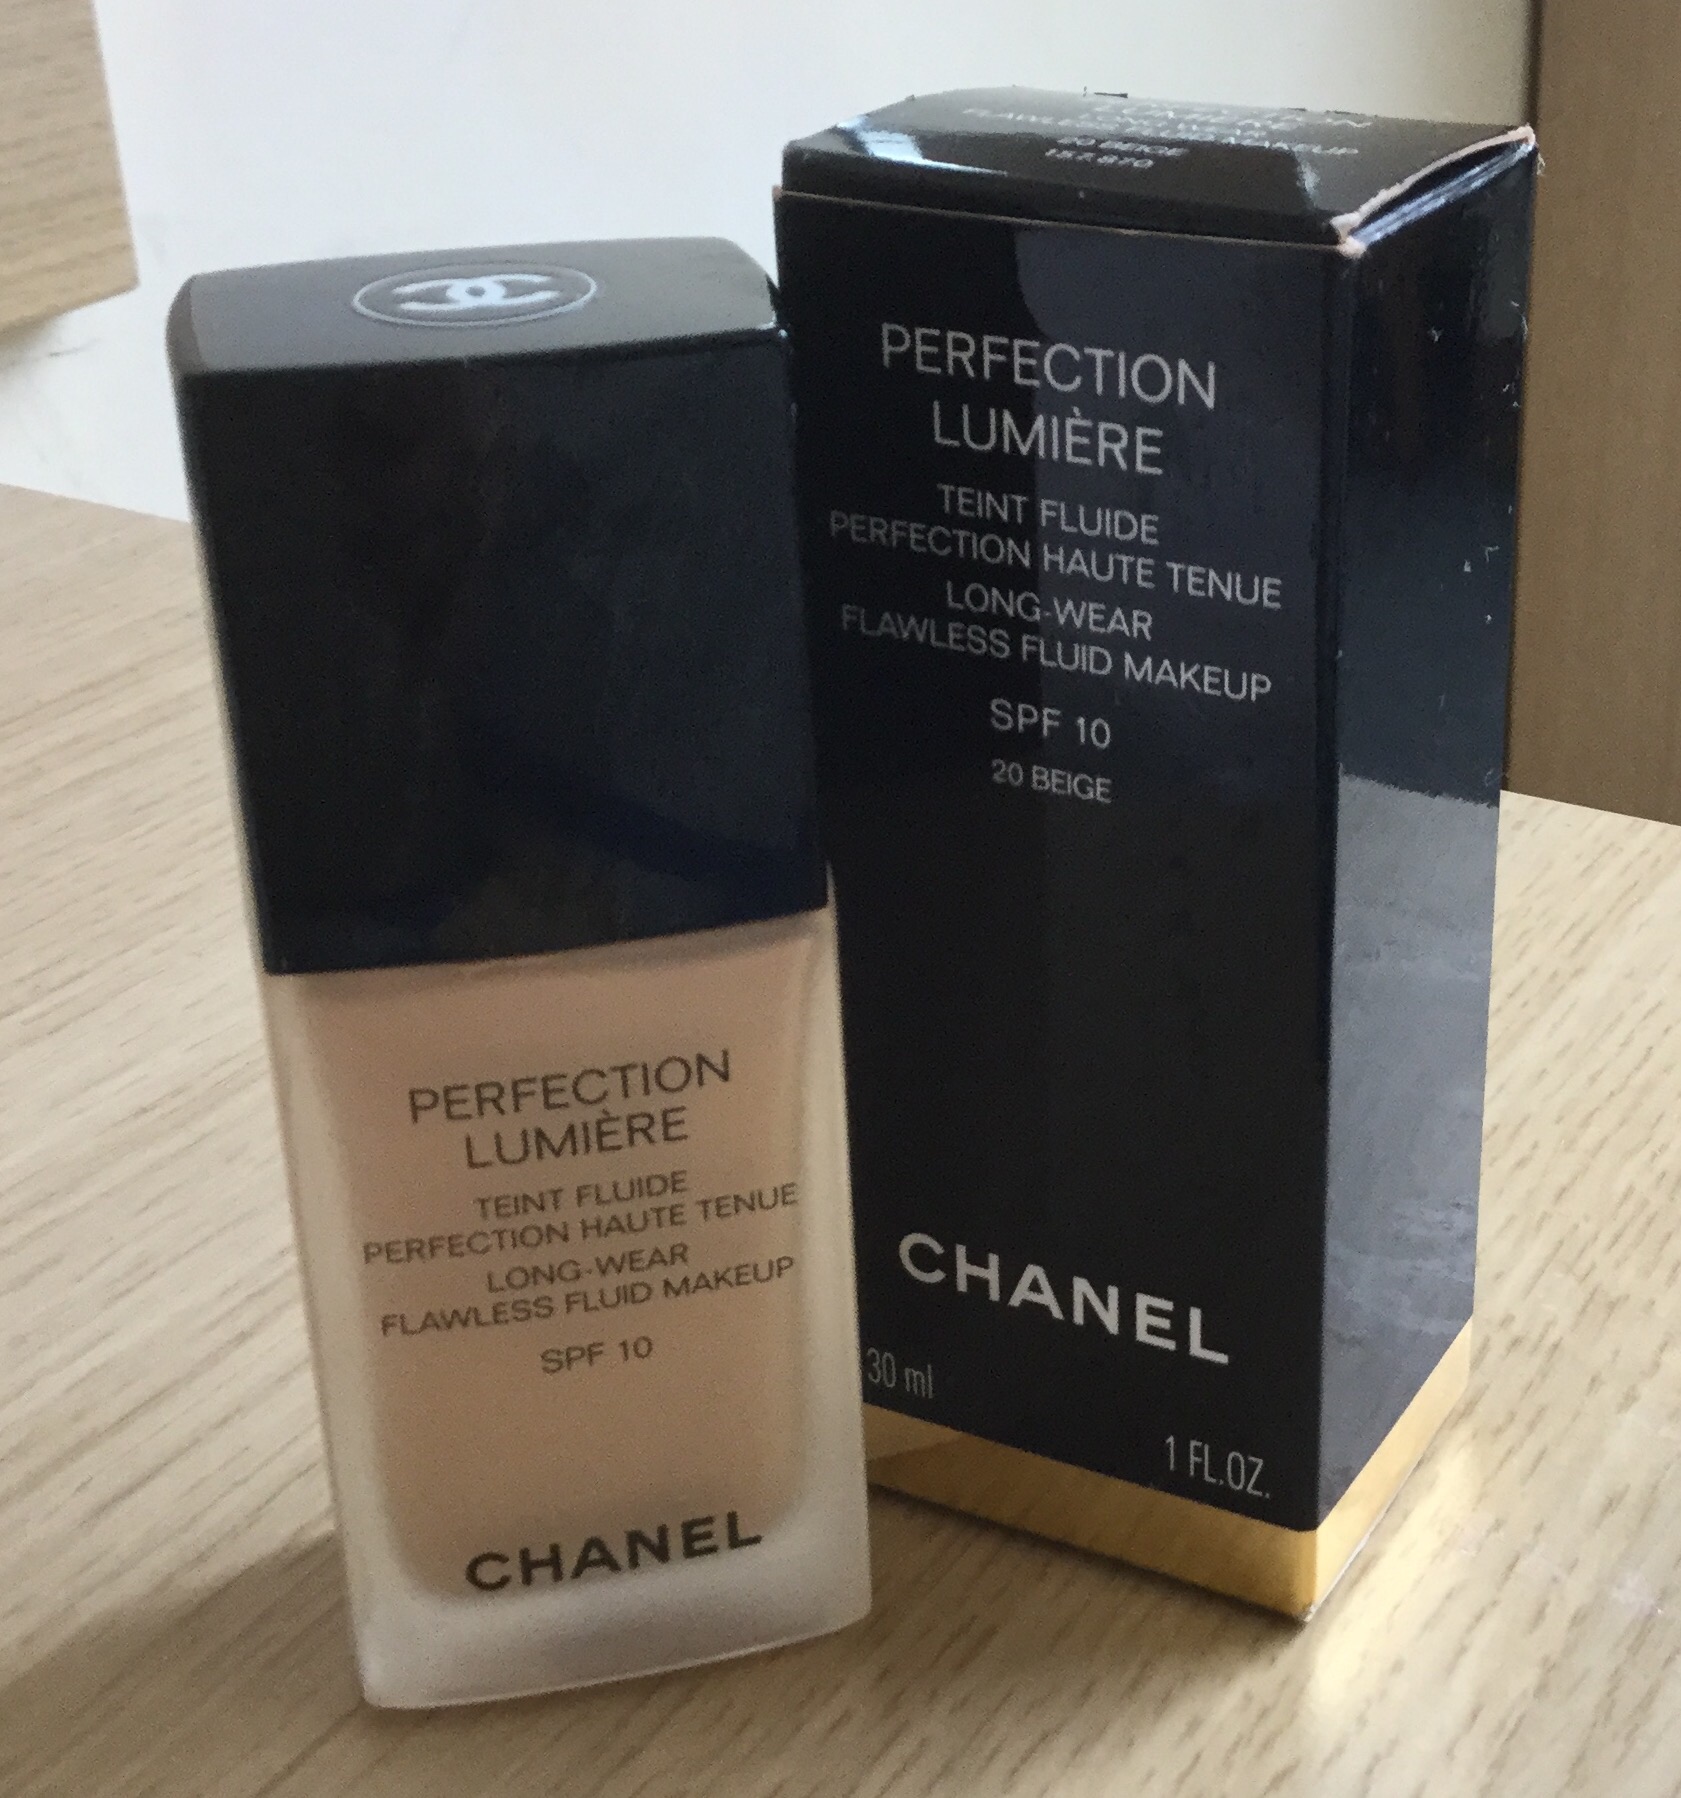 Chanel Vitalumière Aqua Ultra-Light Skin Perfecting Sunscreen Makeup Review